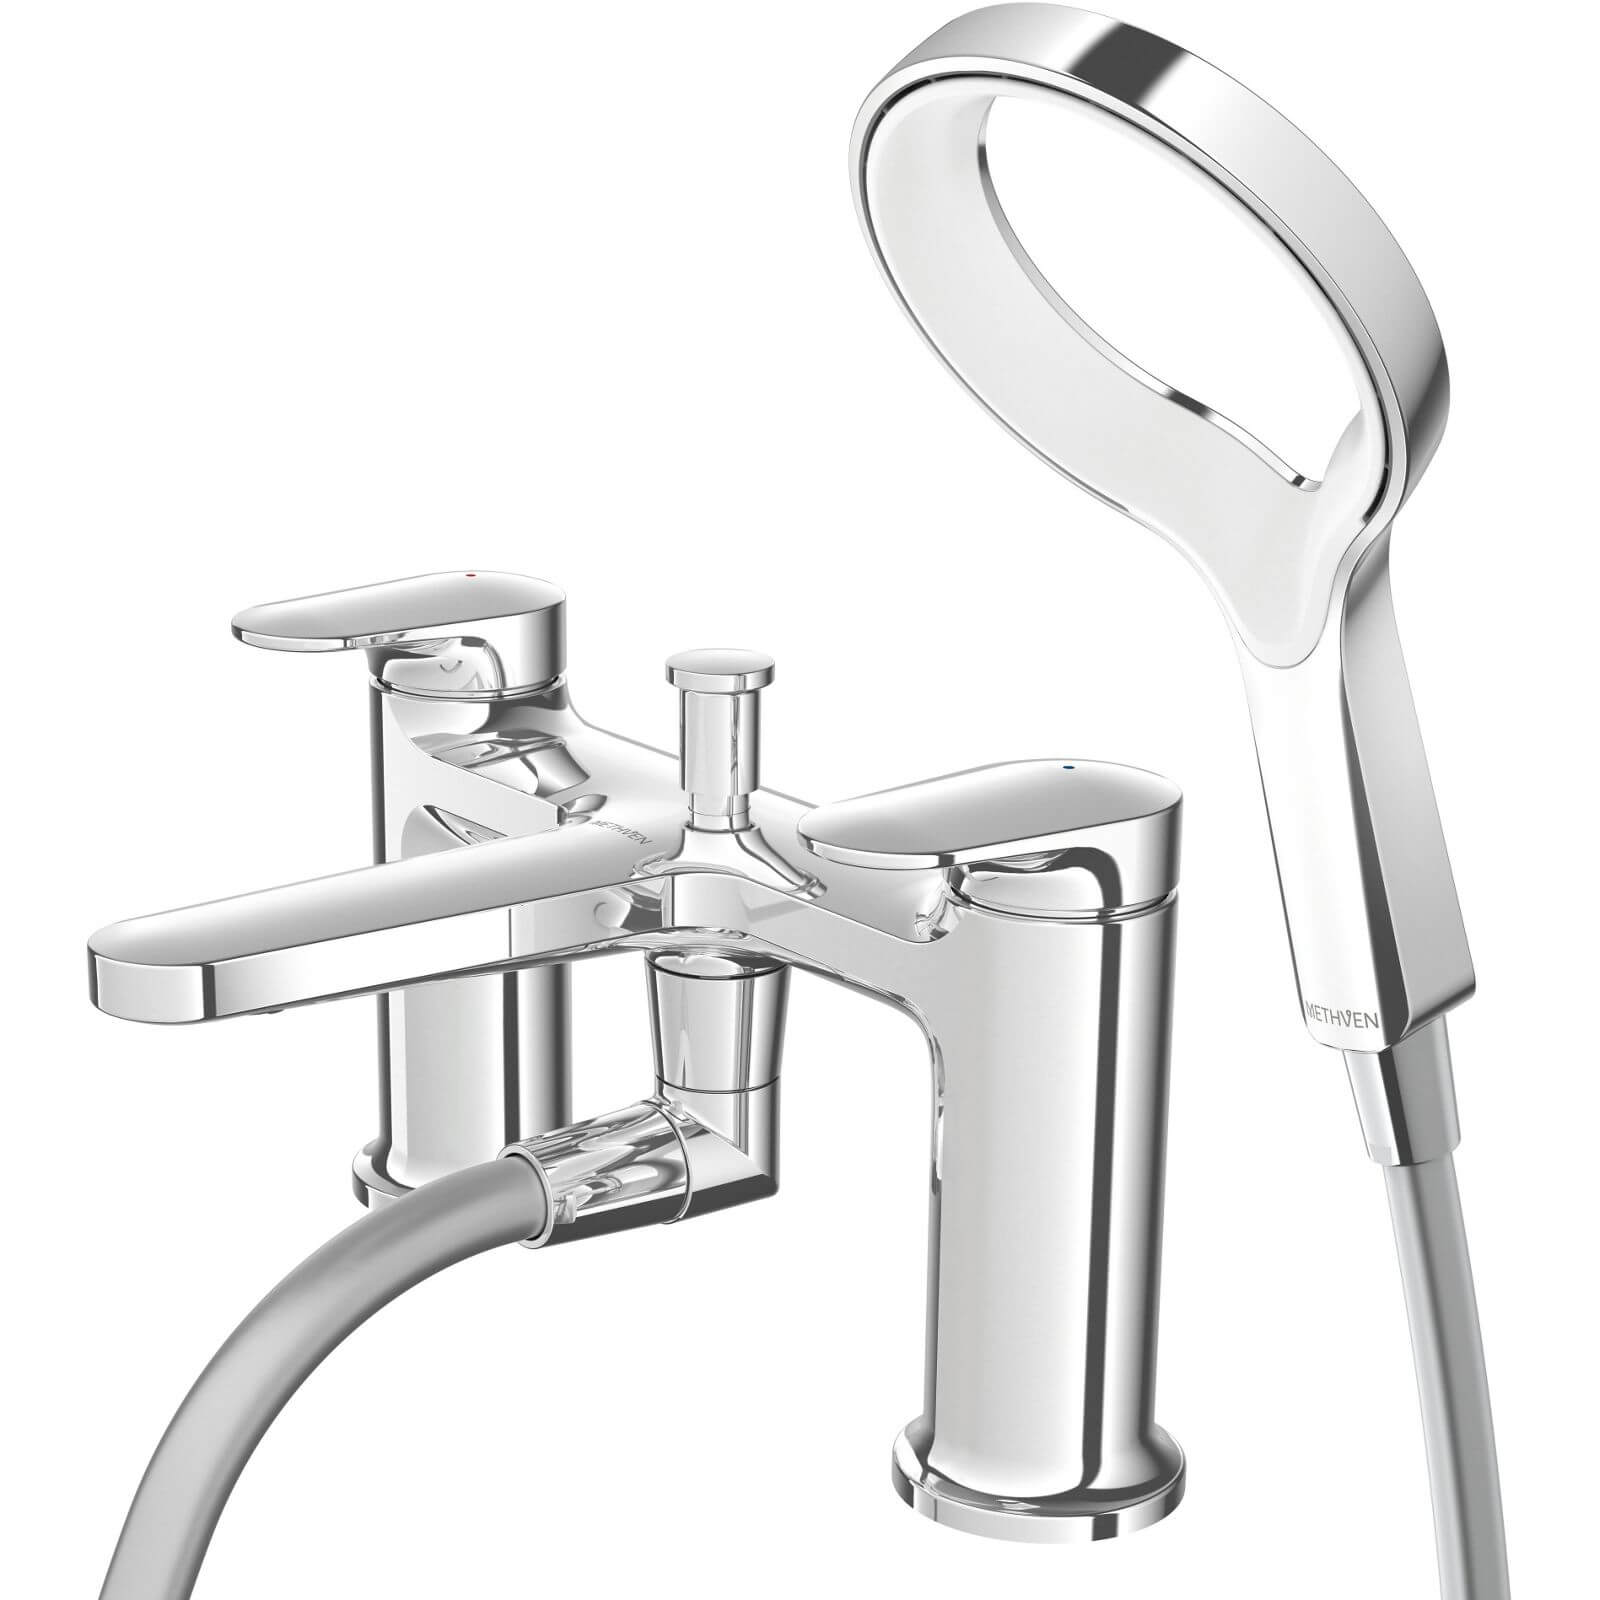 Methven Aio Aurajet Bath Shower Mixer Tap - Chrome & White